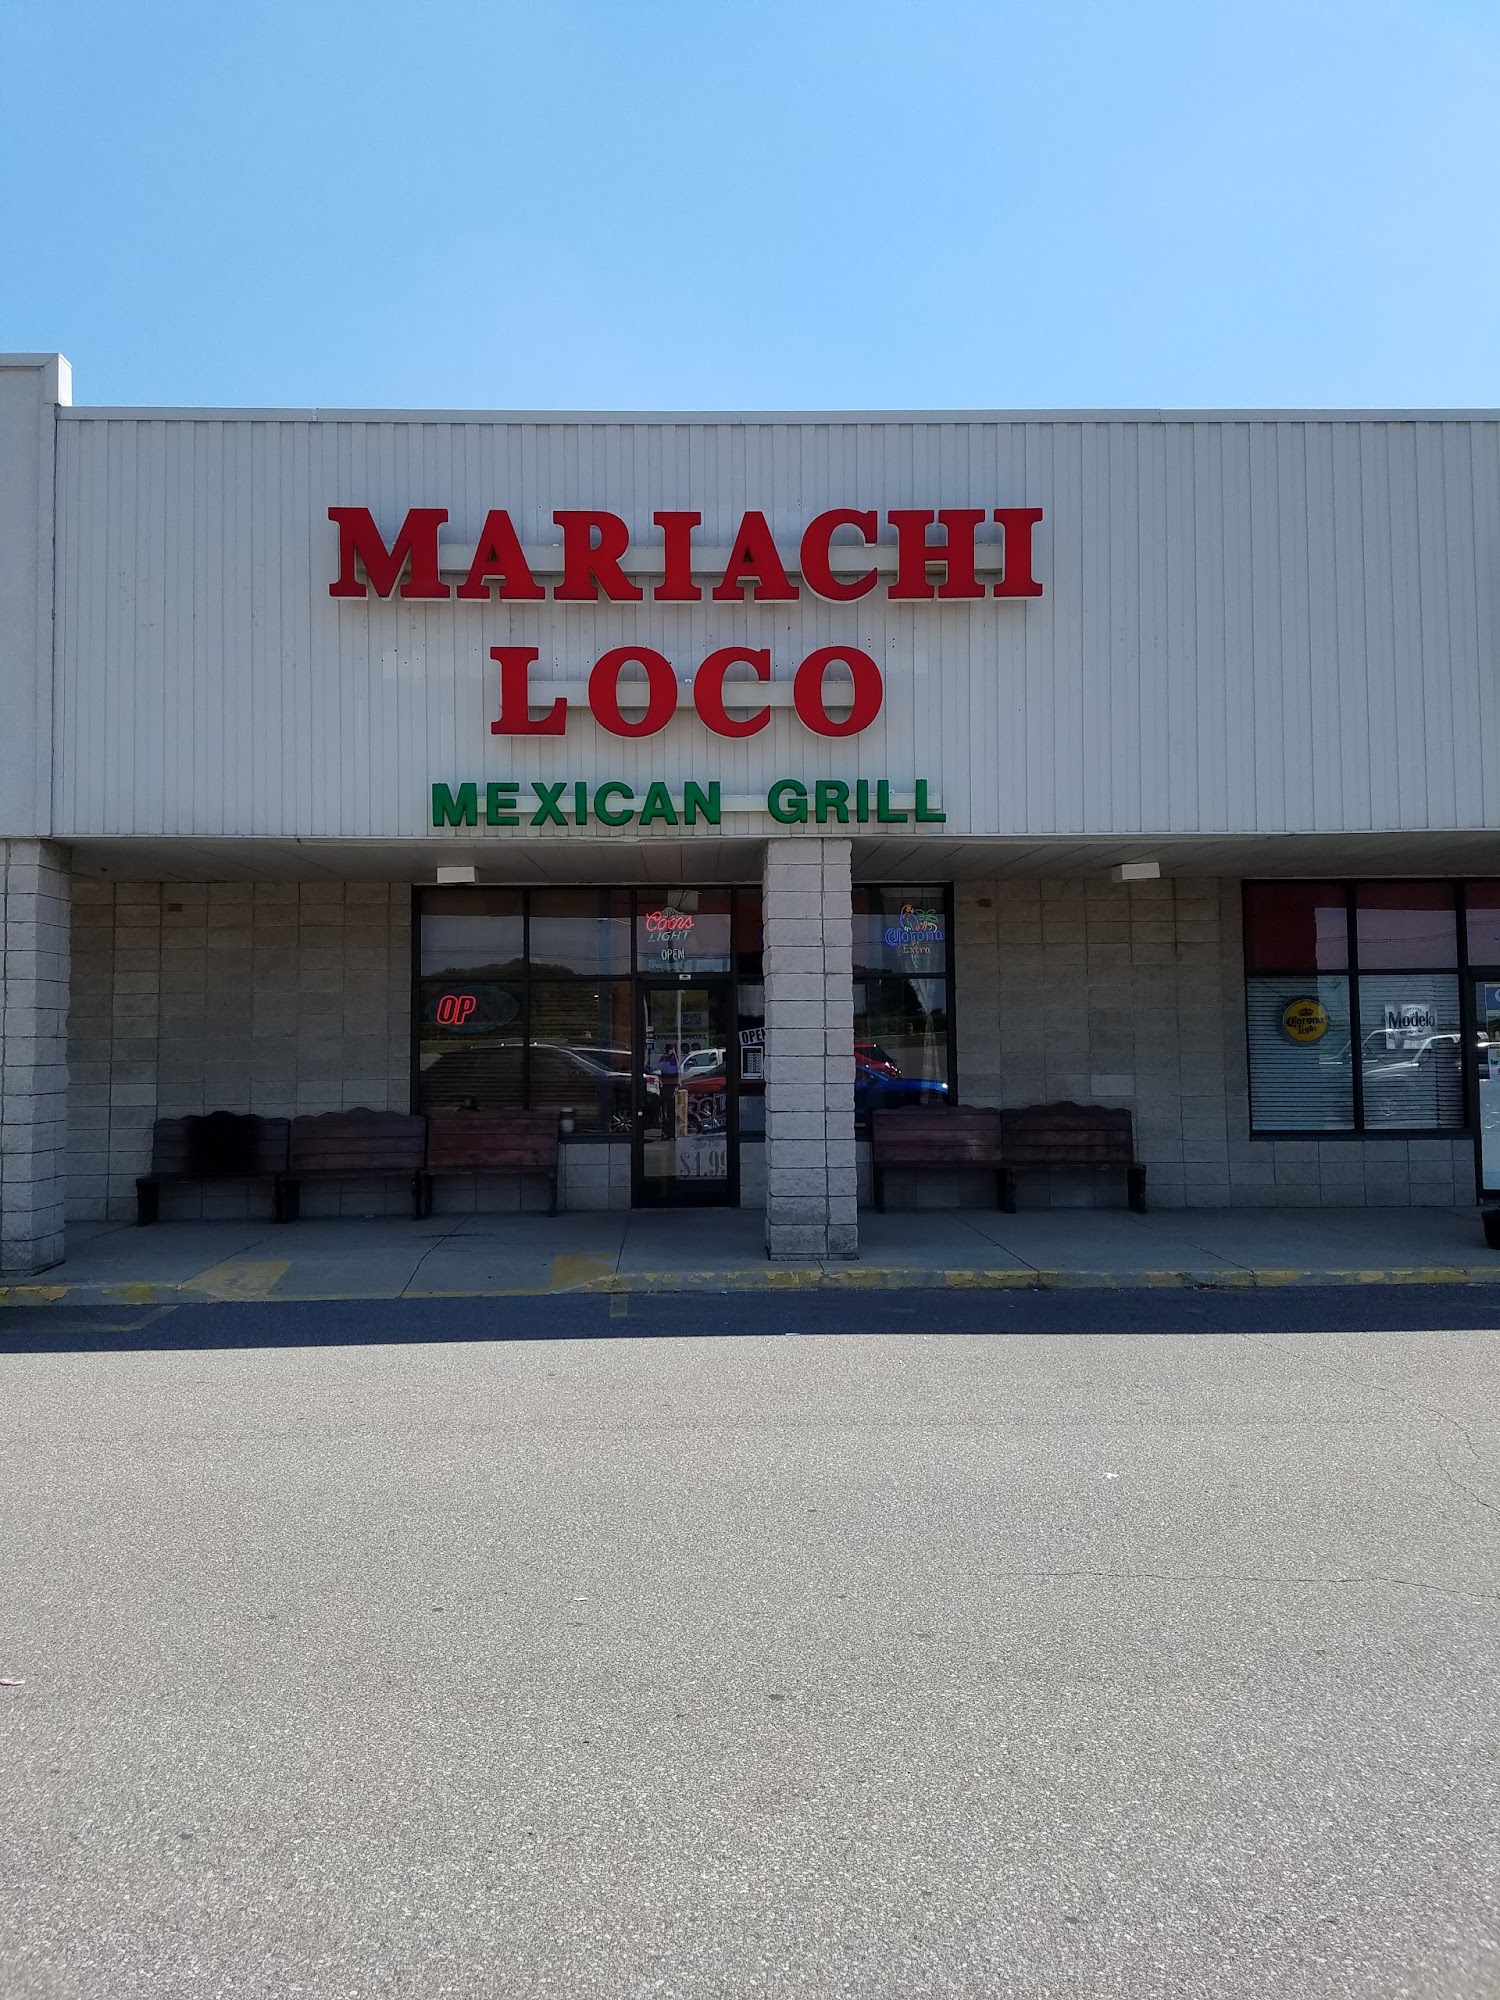 Mariachi Loco Mexican Grill & Bar